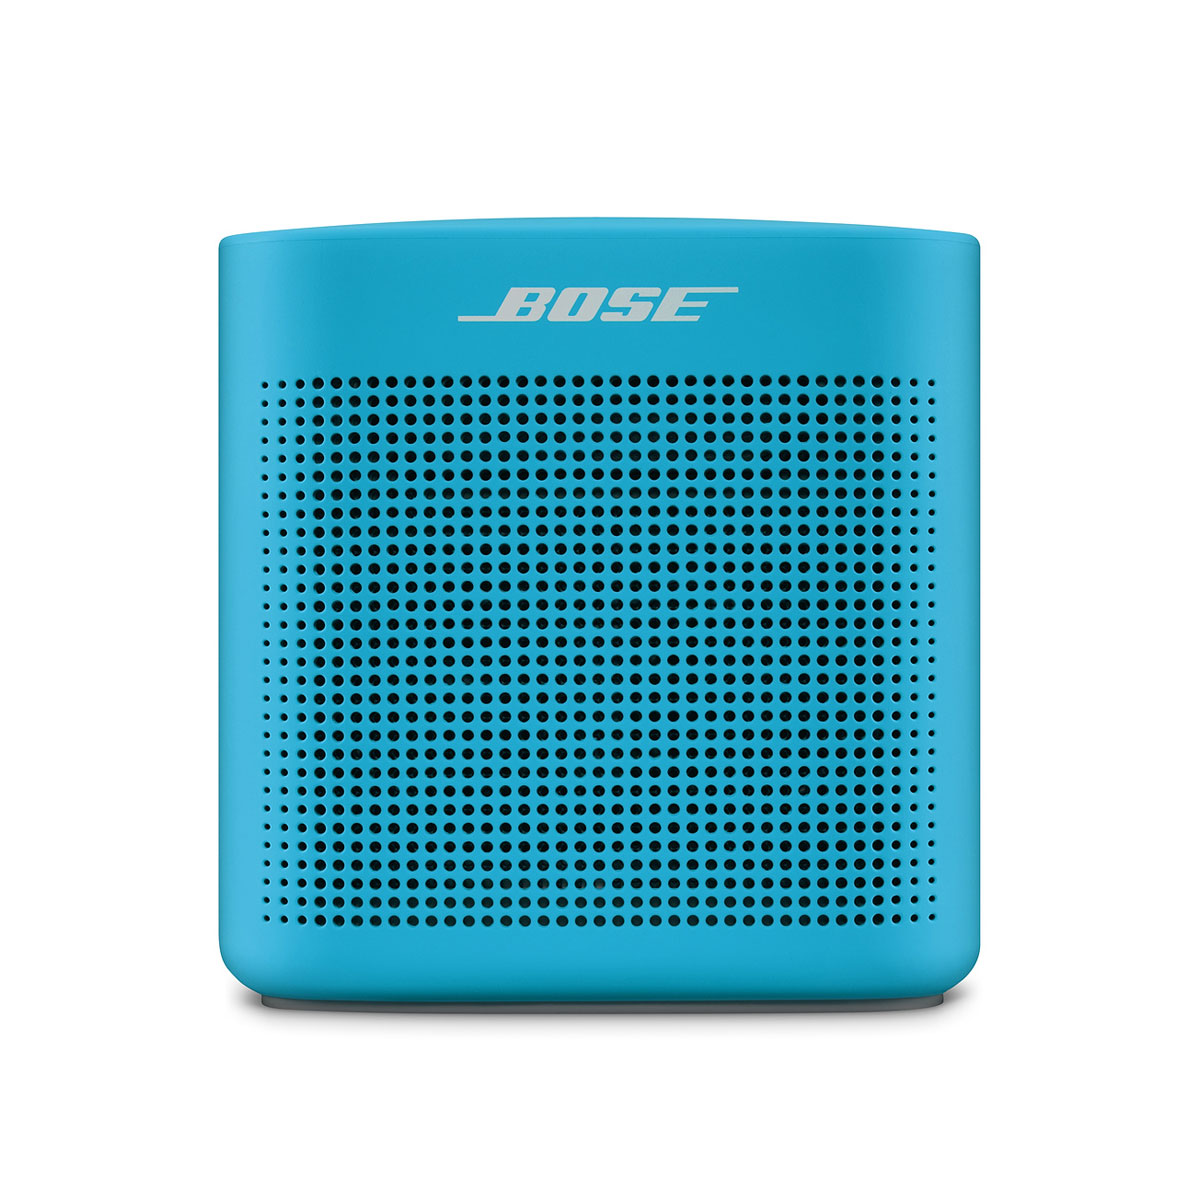 Bose - SoundLink Colour II - Aquatic Blue